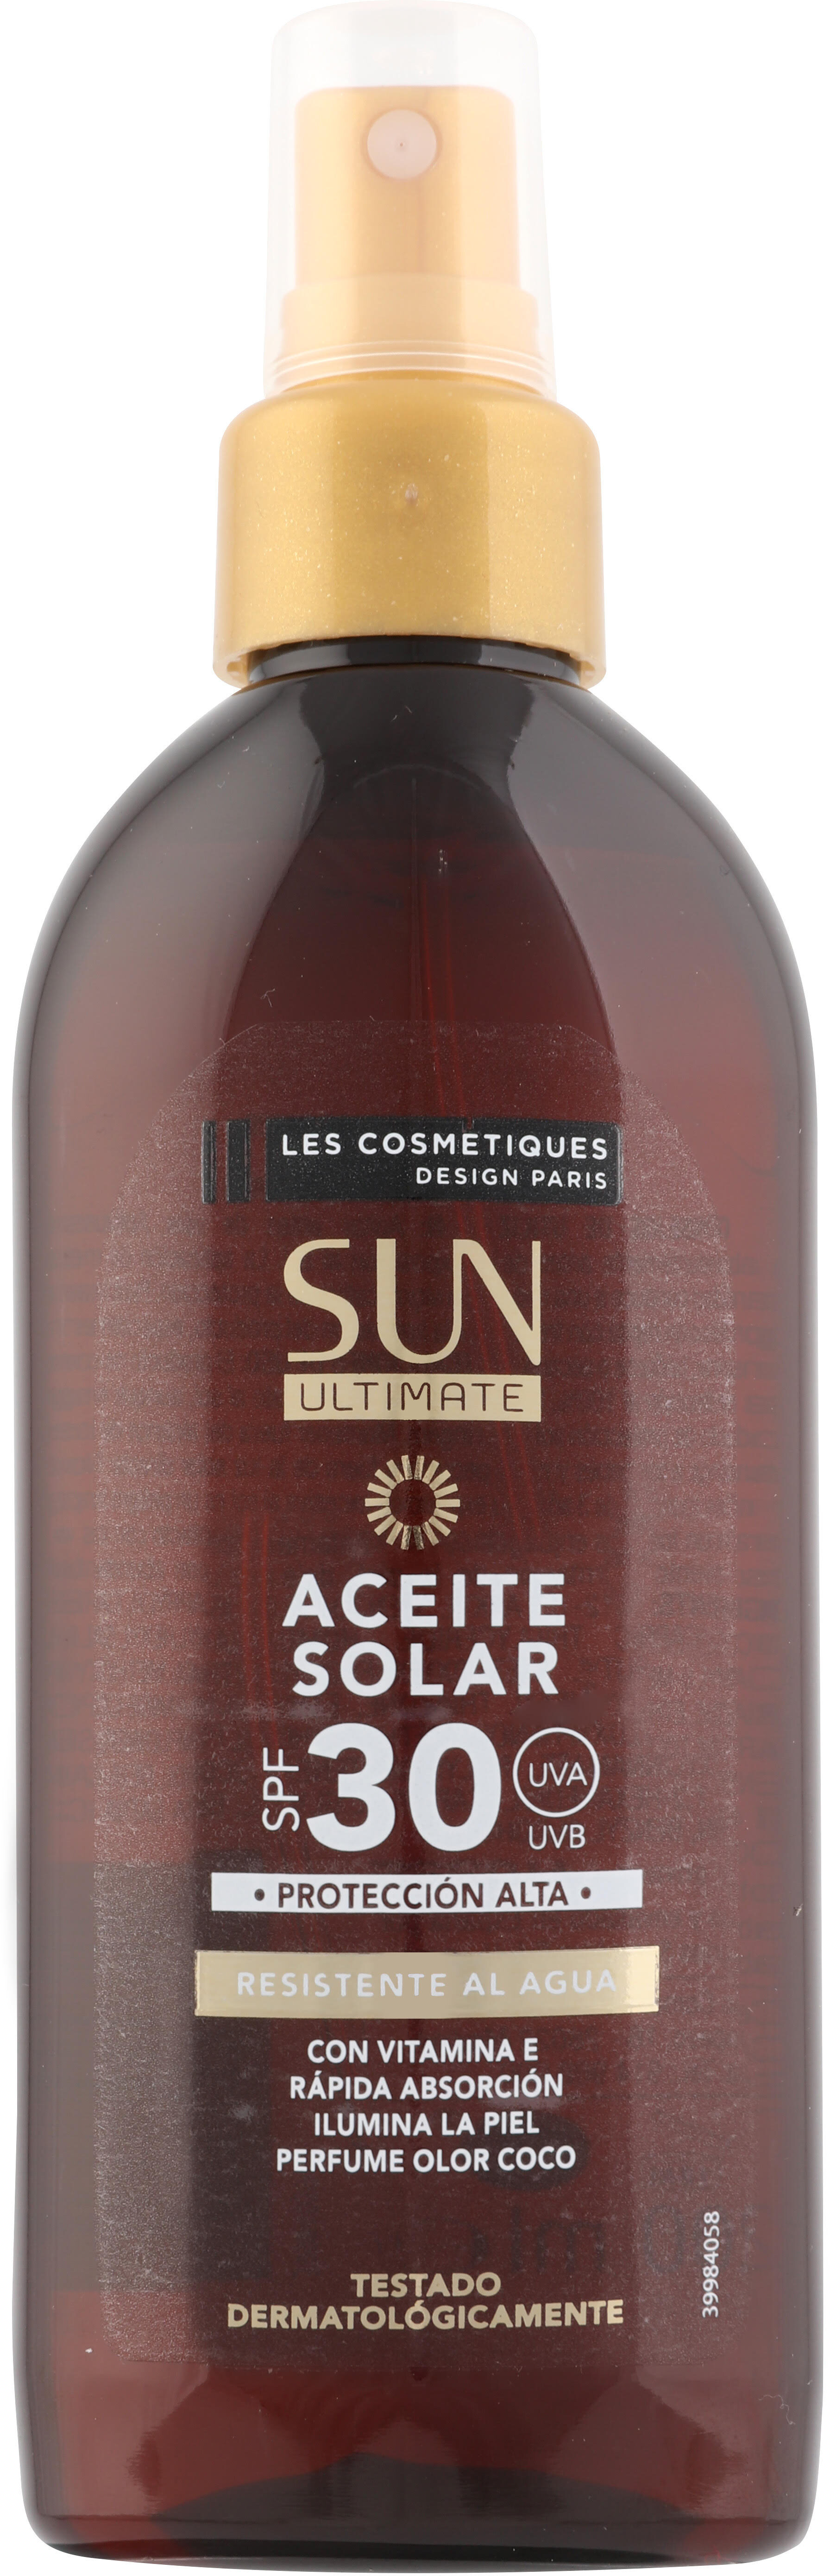 Aceite solar coco spf30 sun ultimate spray - Produto - es